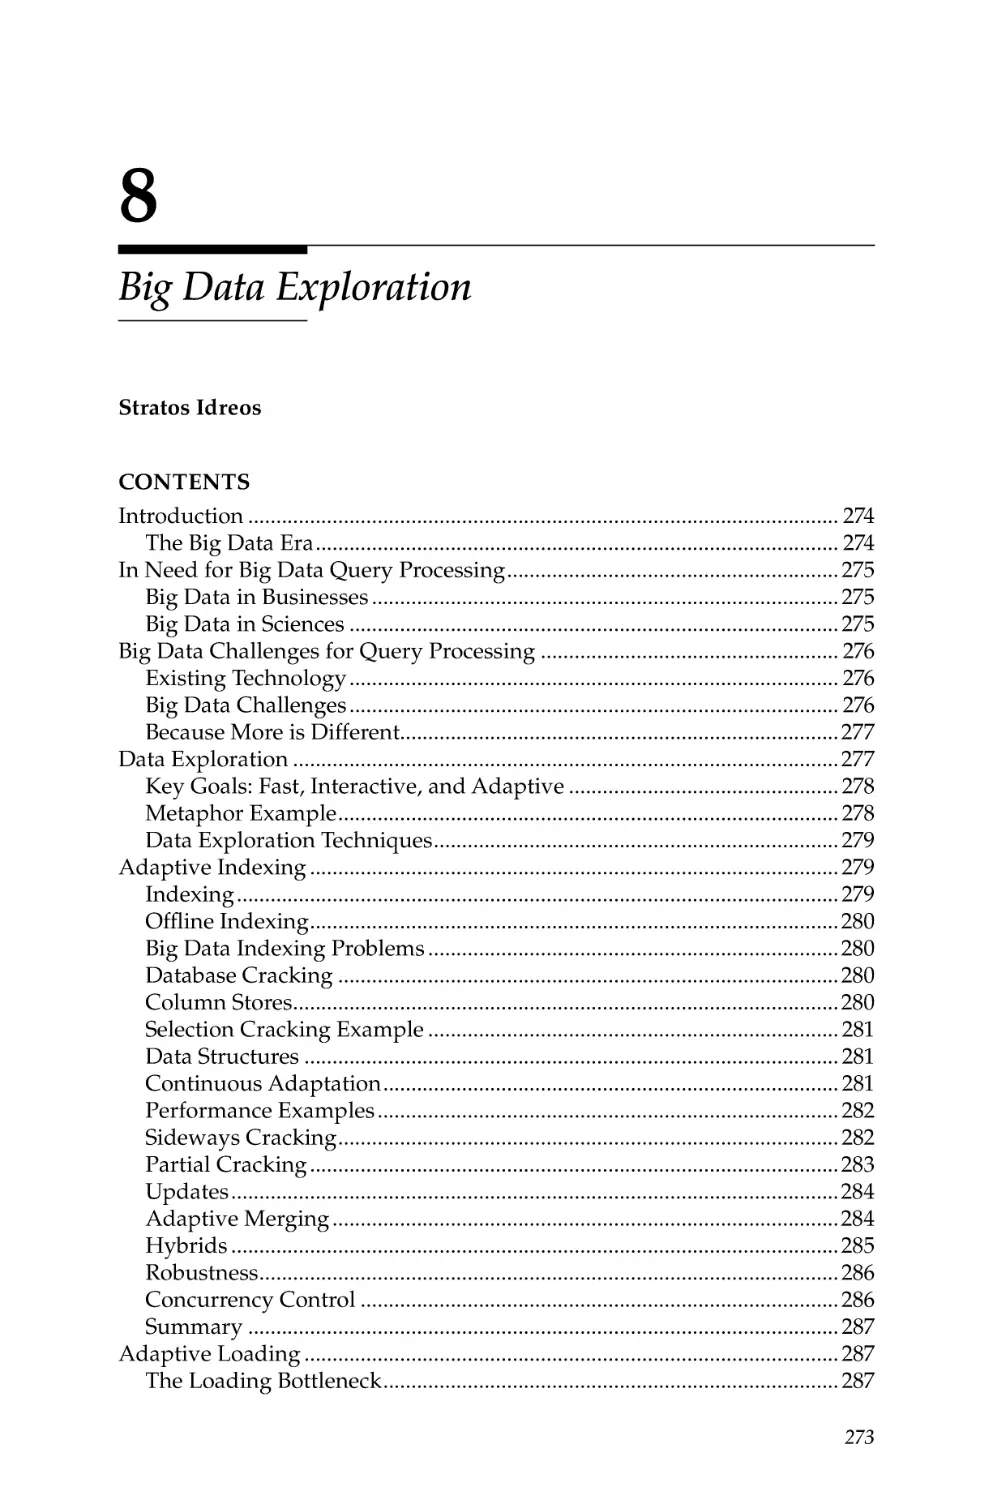 8. Big Data Exploration